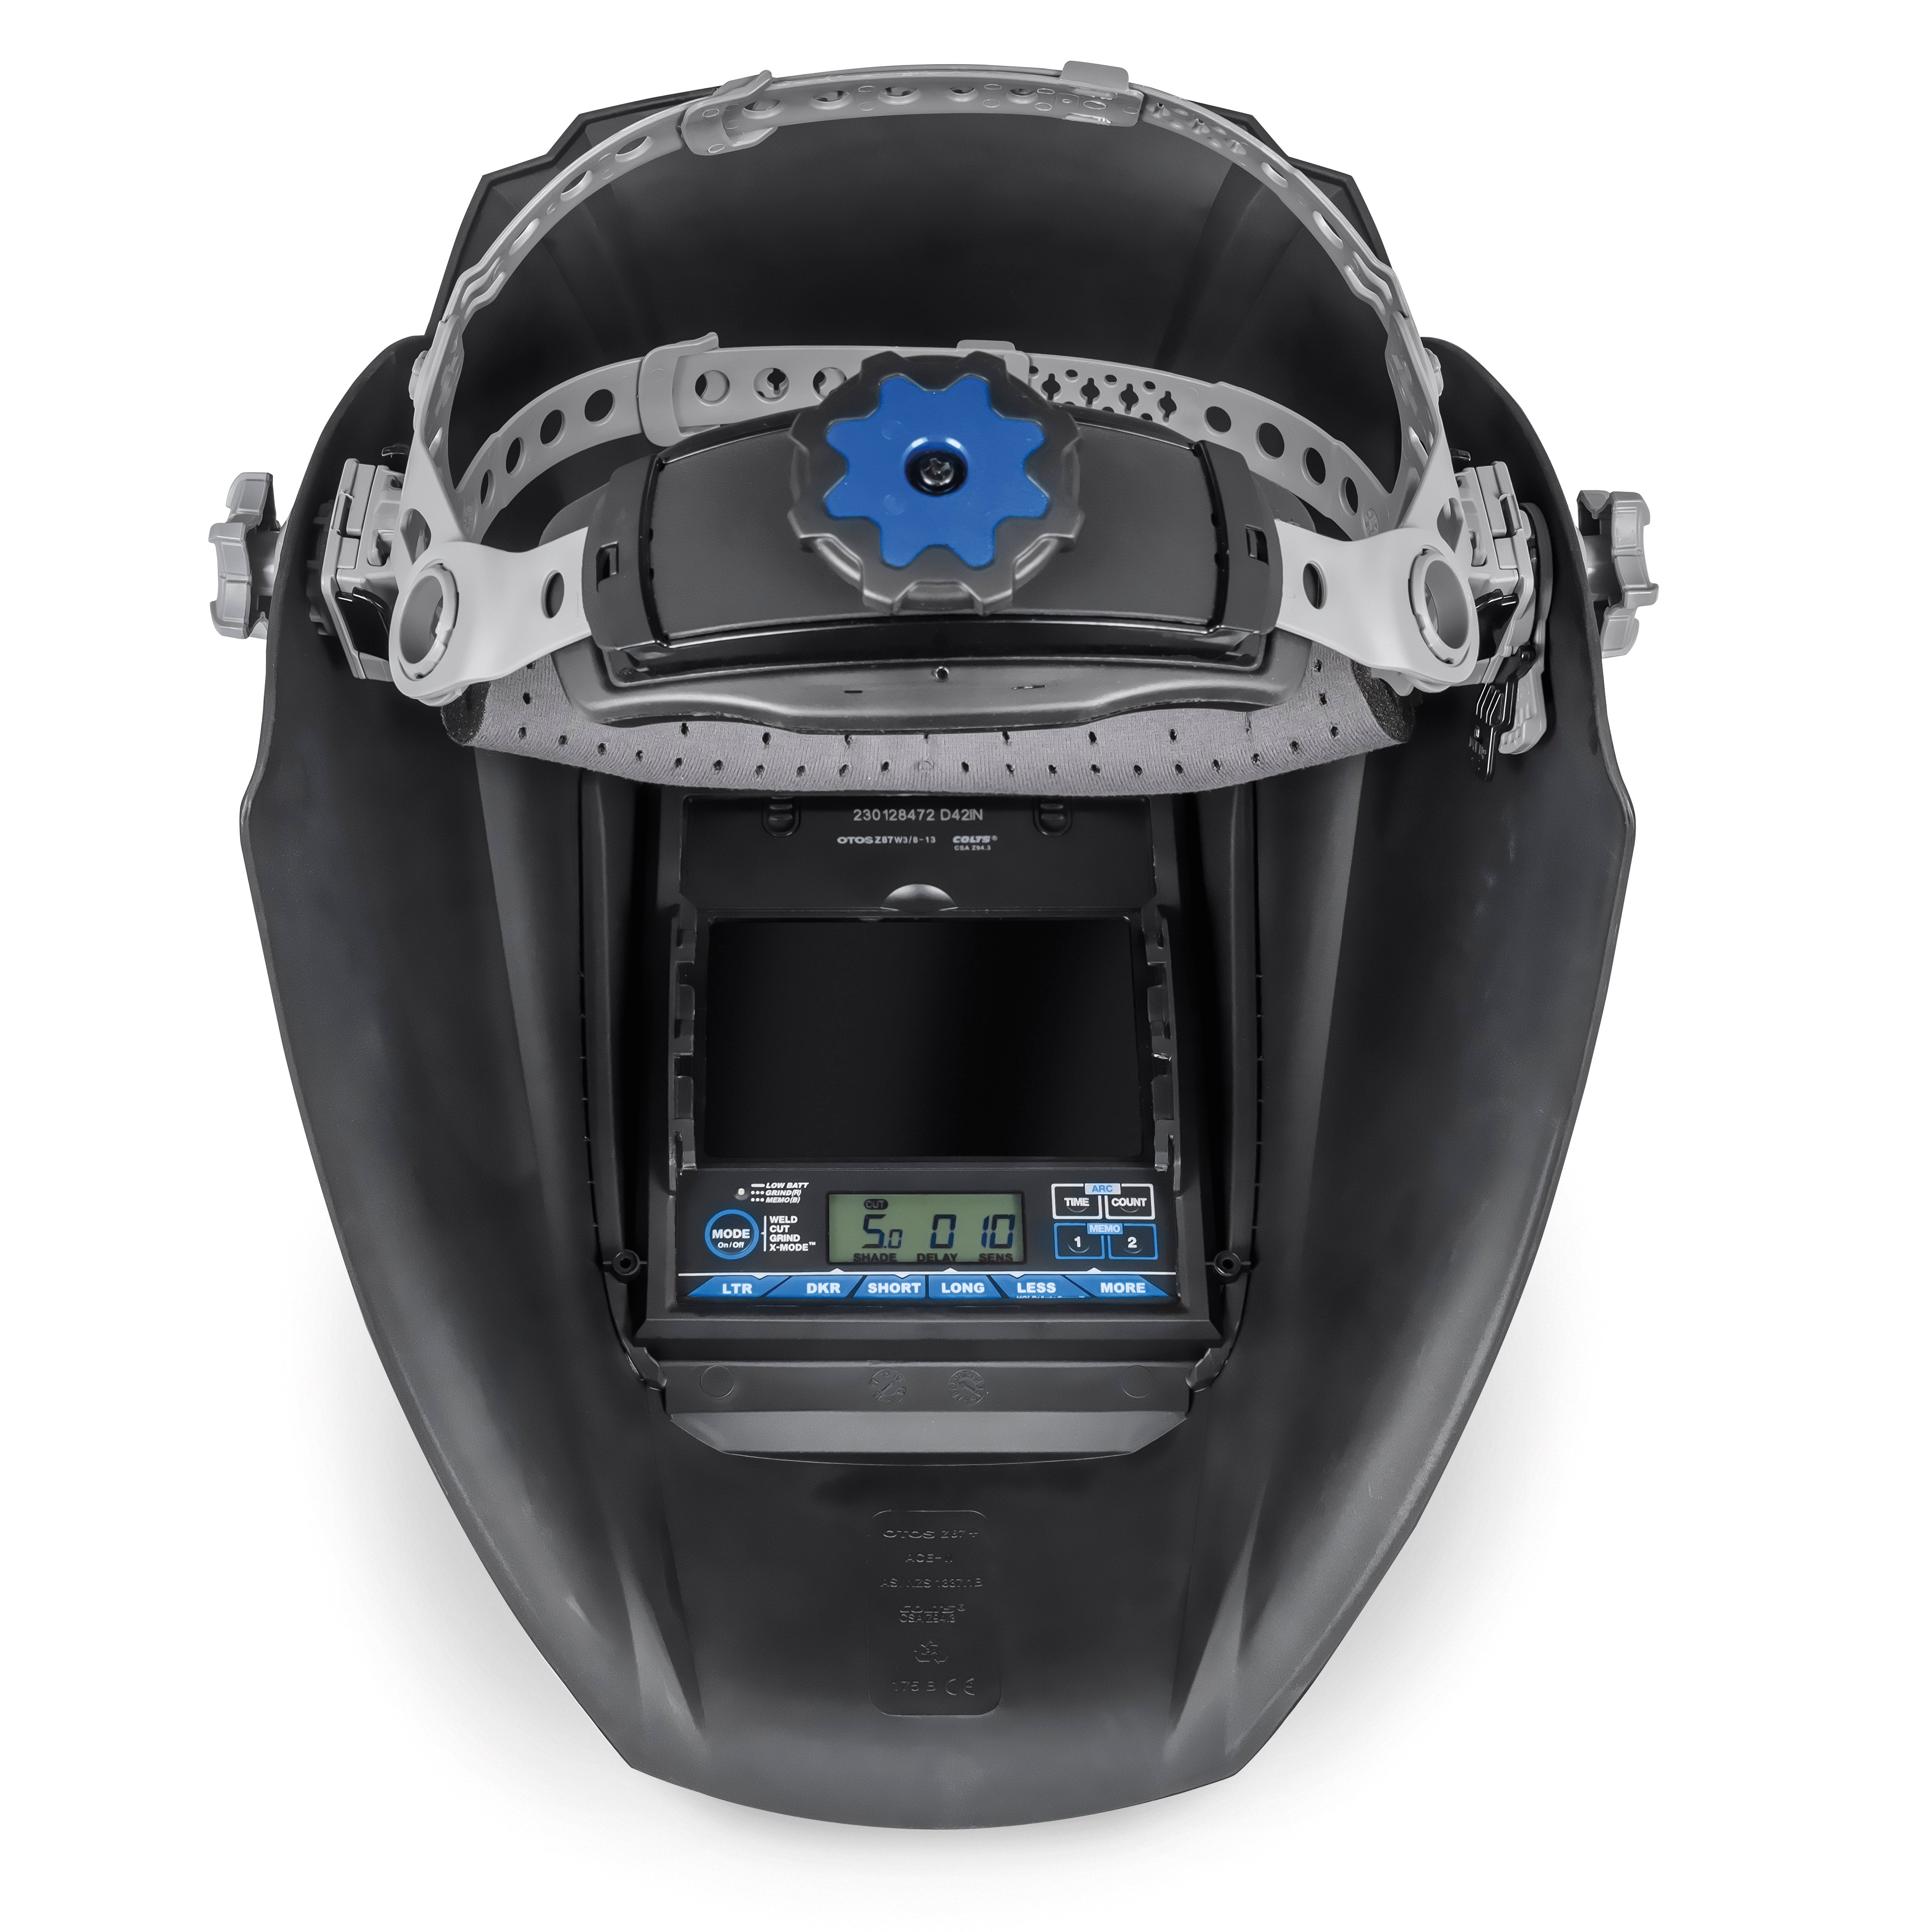 Miller Vintage Roadster Digital Elite Welding Helmet w/ClearLight 2.0 Lens (289764)